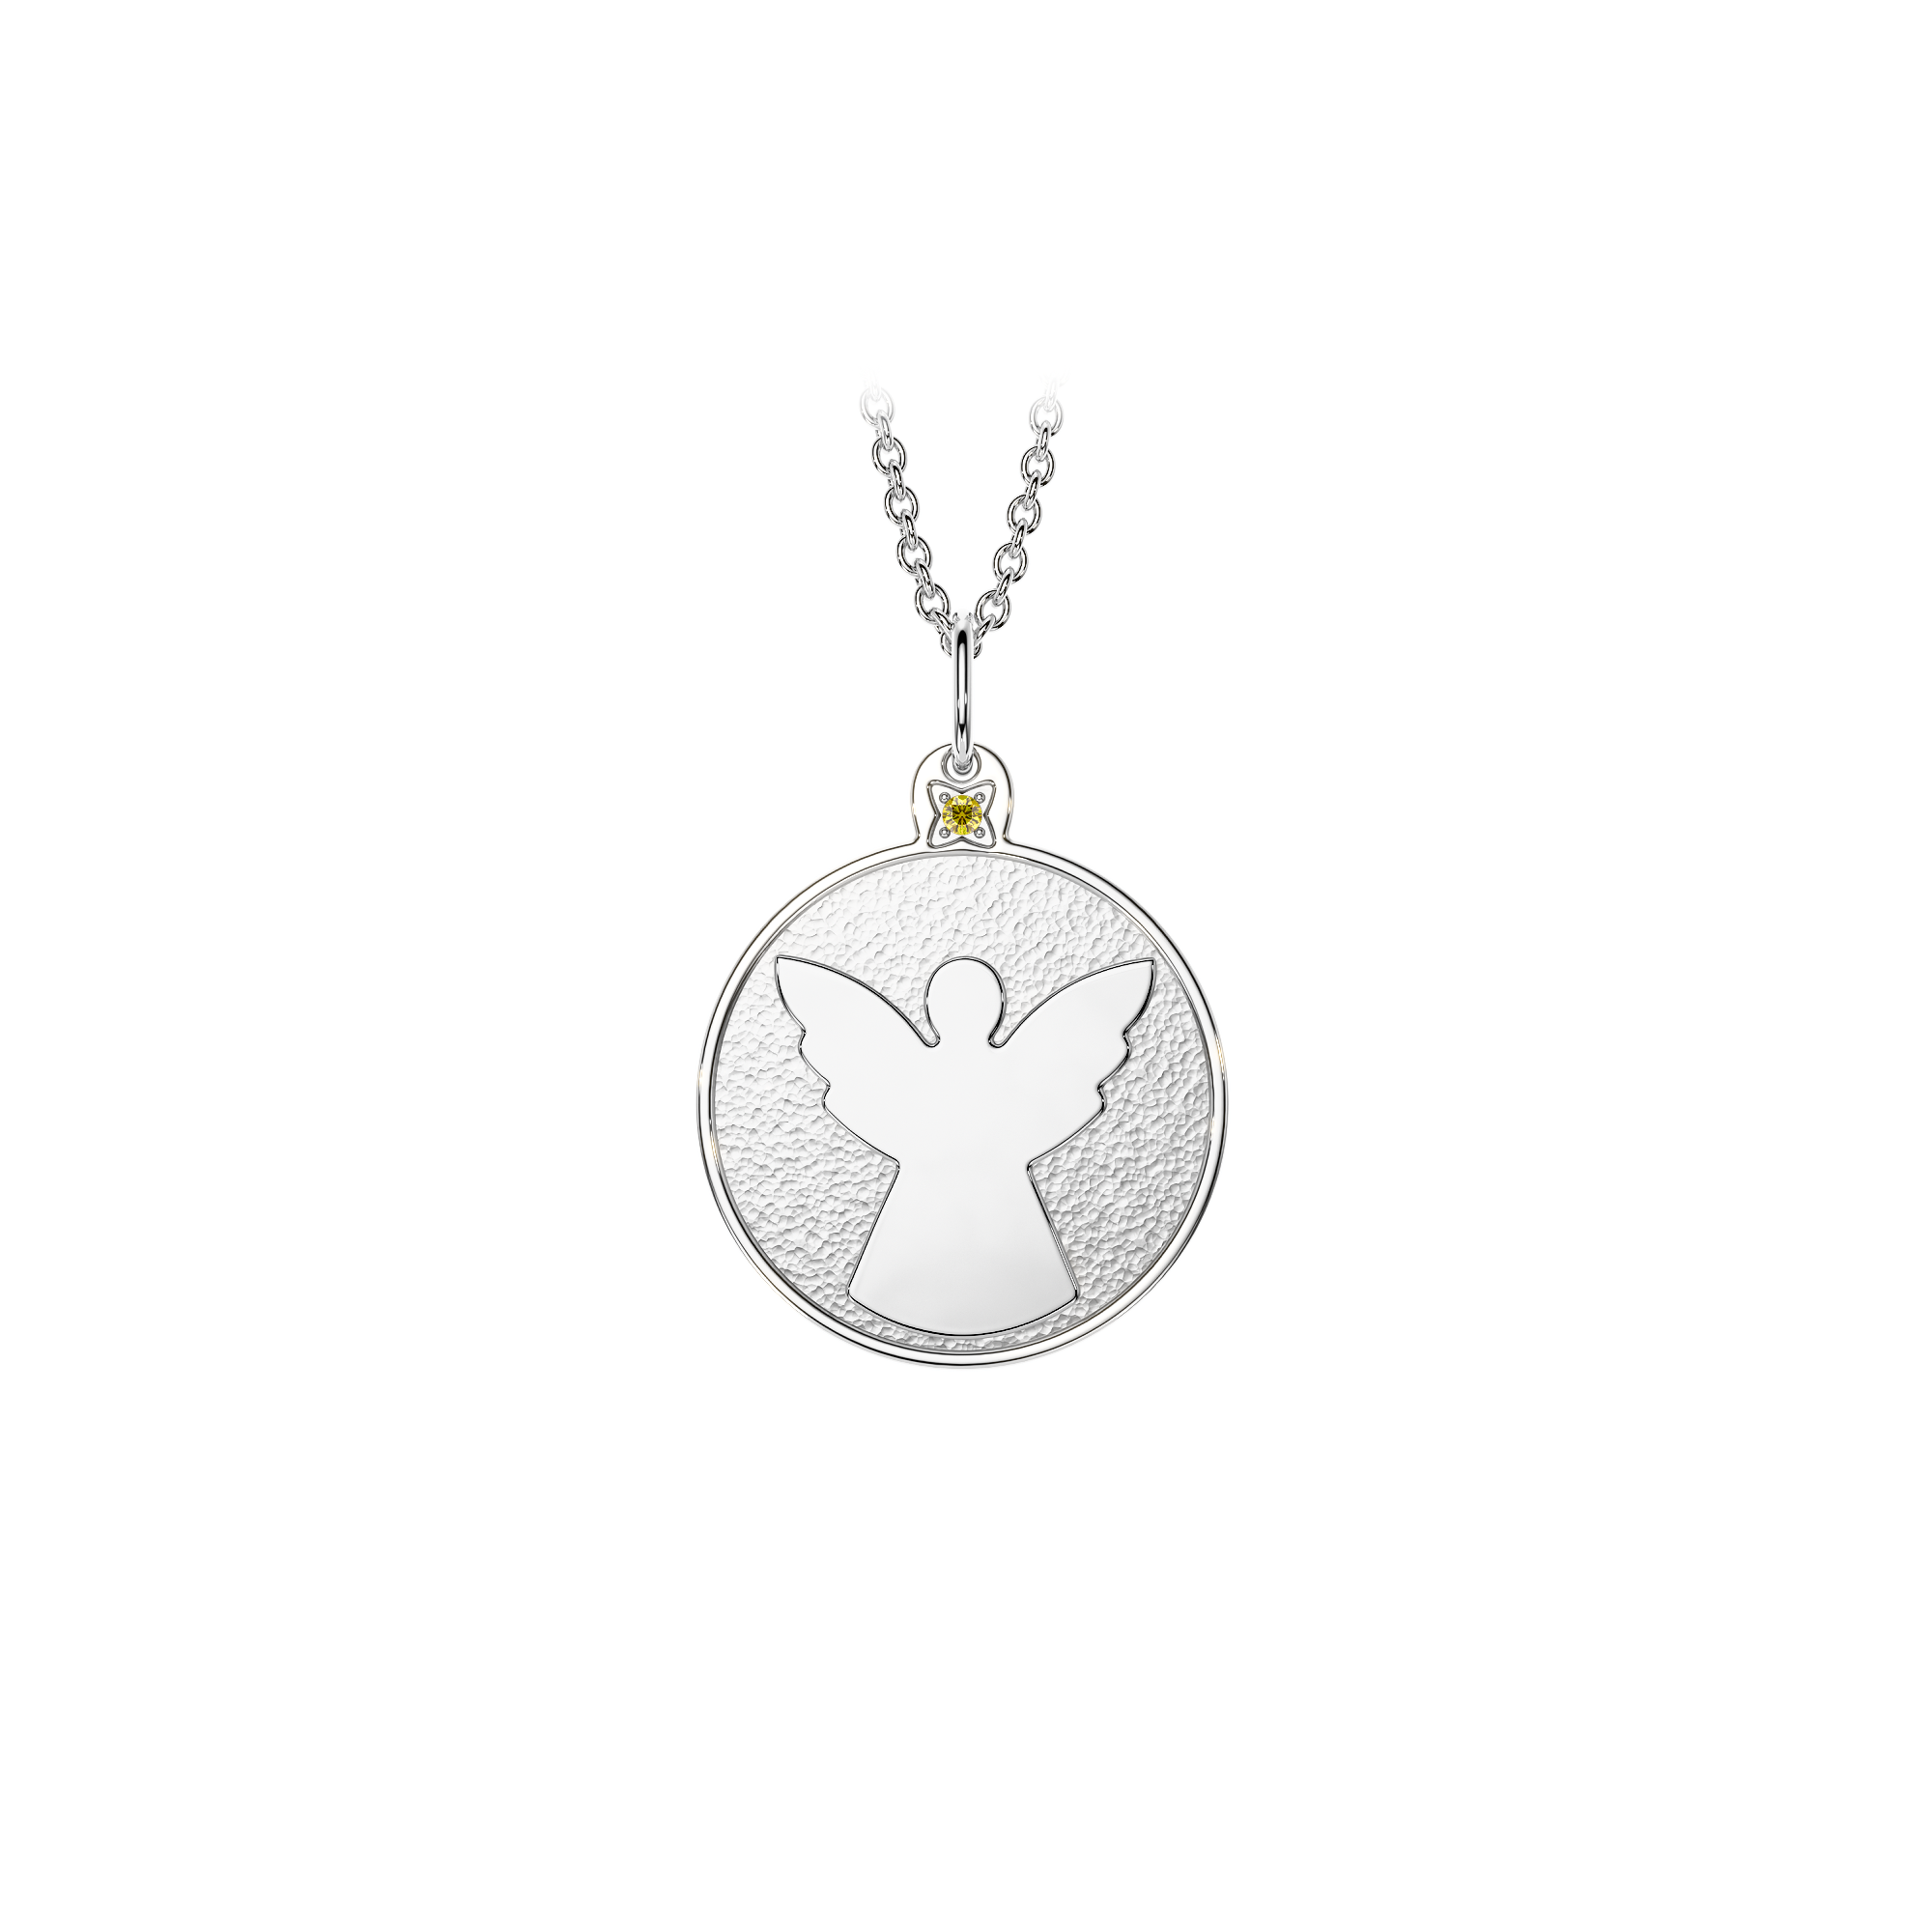 14 k white gold Archangel Jophiel pendant